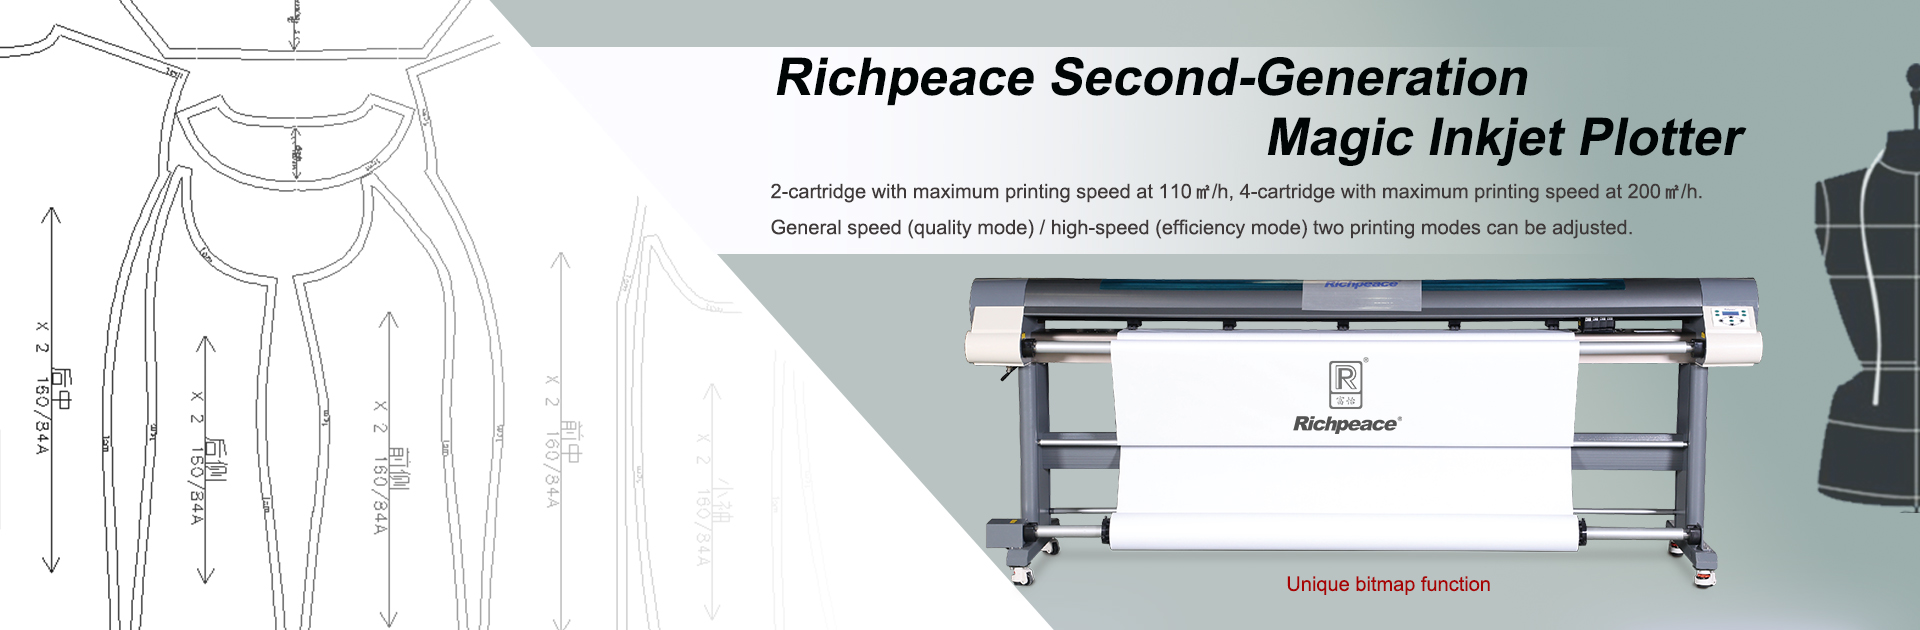 Richpeace Second-Generation Magic Inkjet Plotter